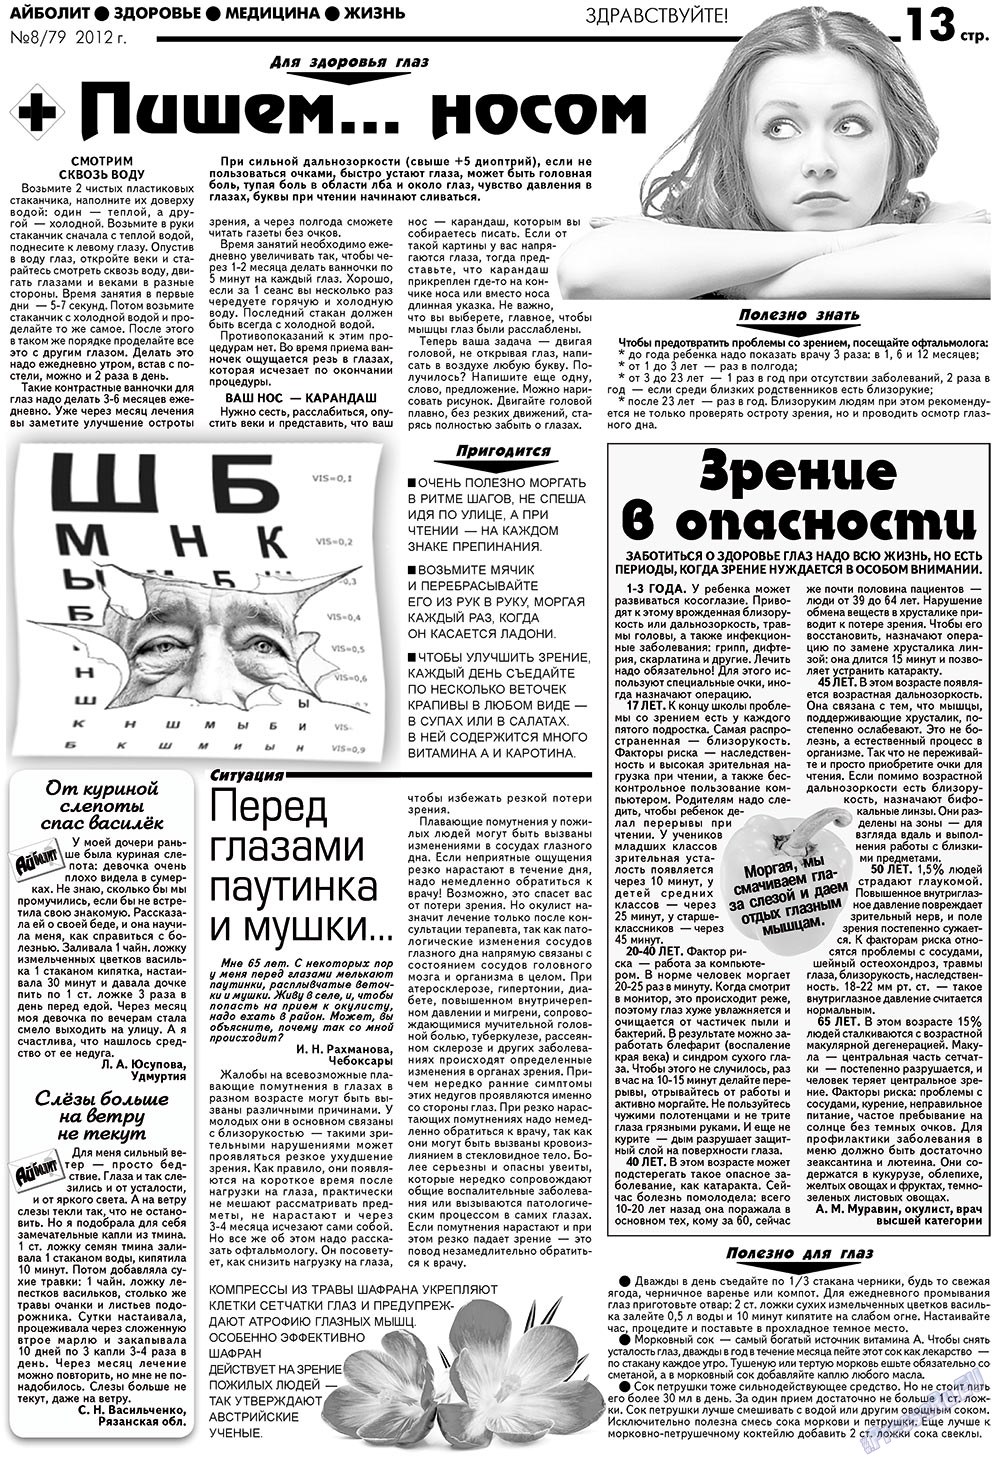 АйБолит (газета). 2012 год, номер 8, стр. 13